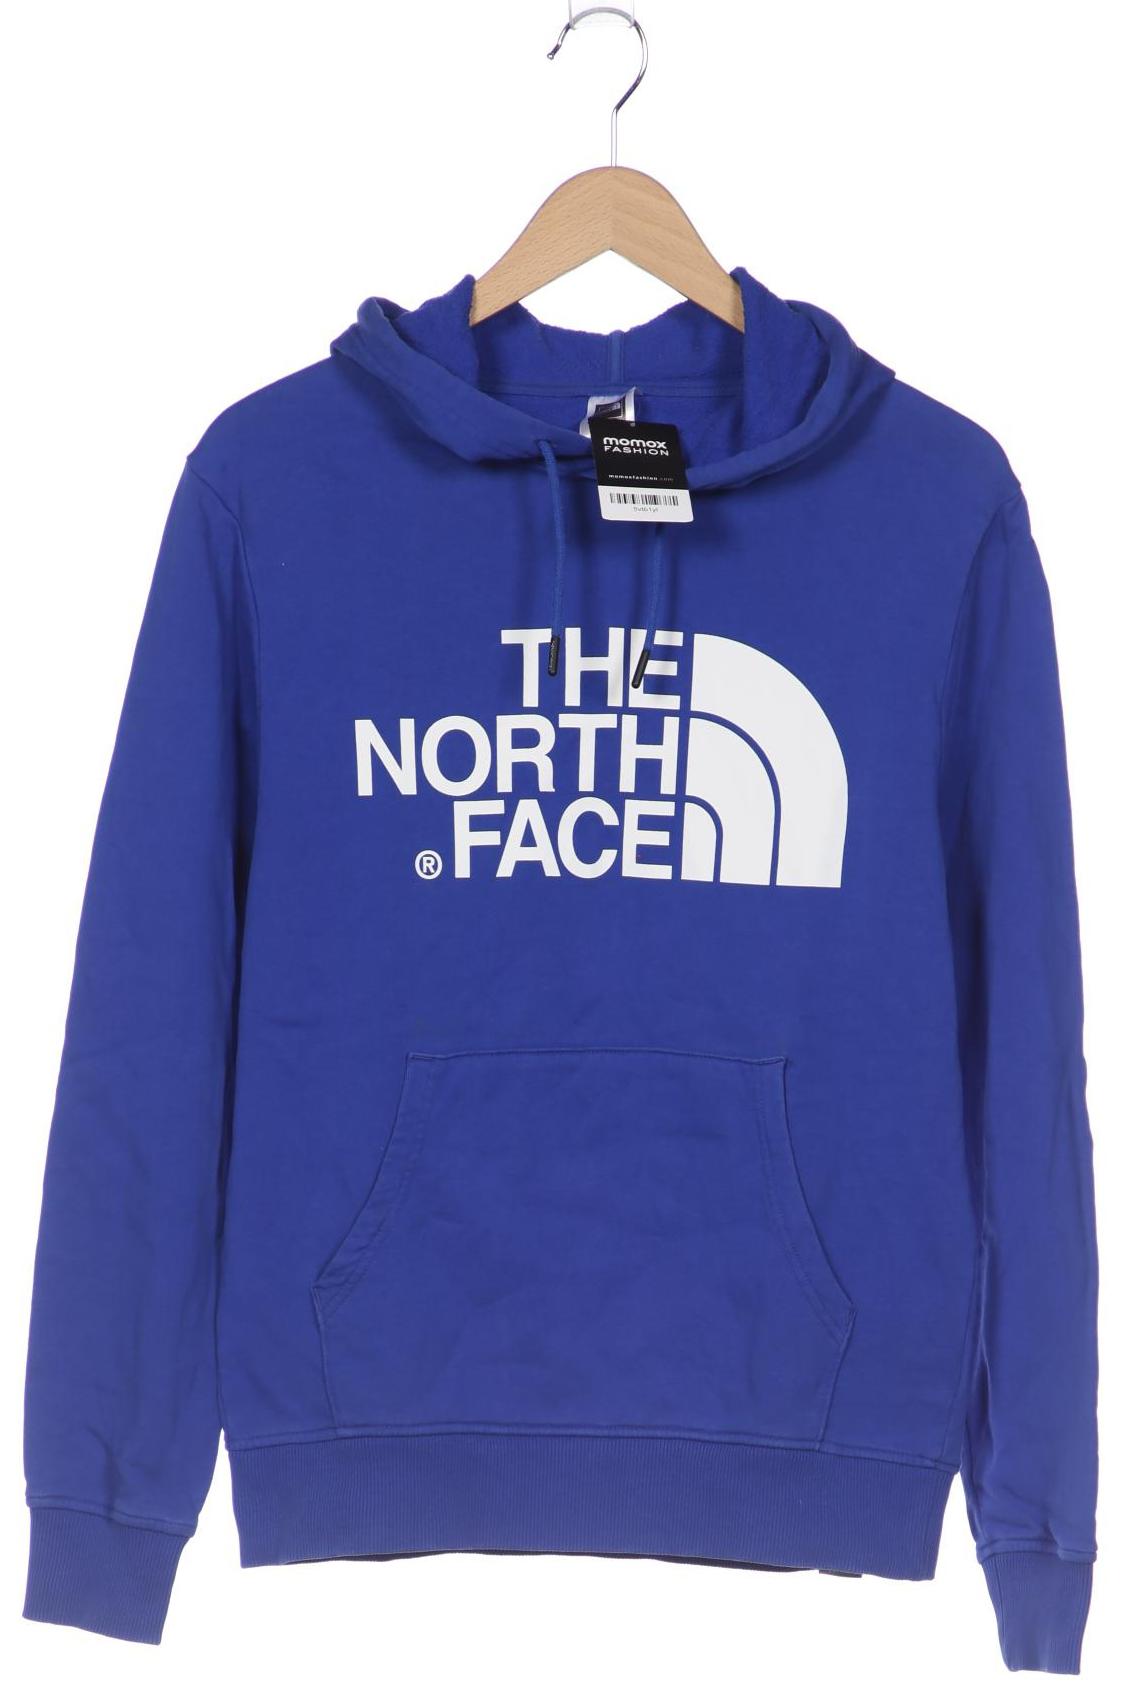 The North Face Herren Kapuzenpullover, marineblau von The North Face